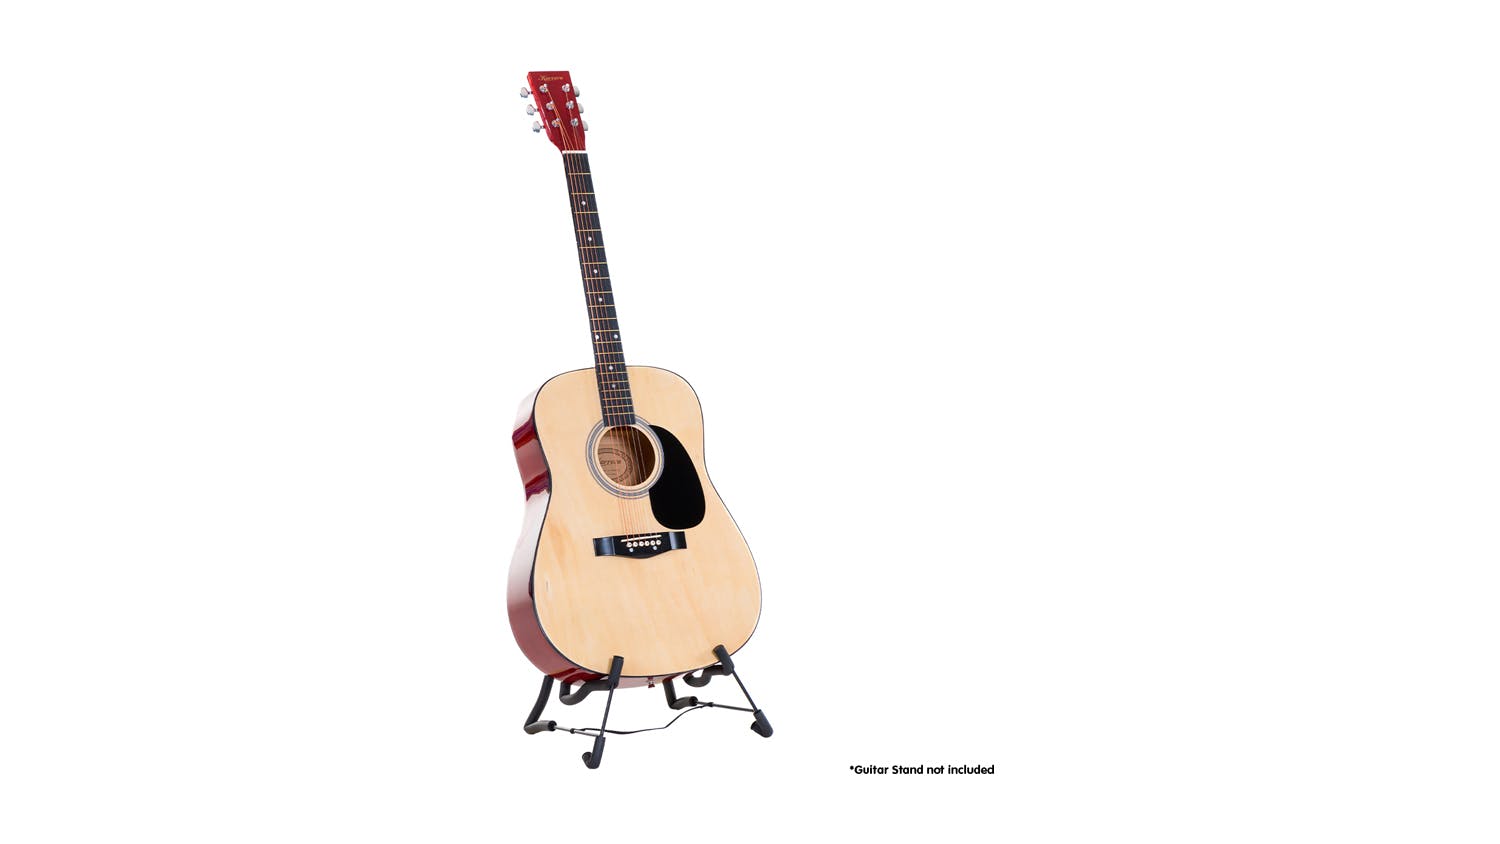 Karrera 41" Acoustic Wooden Guitar with Bag - Natural